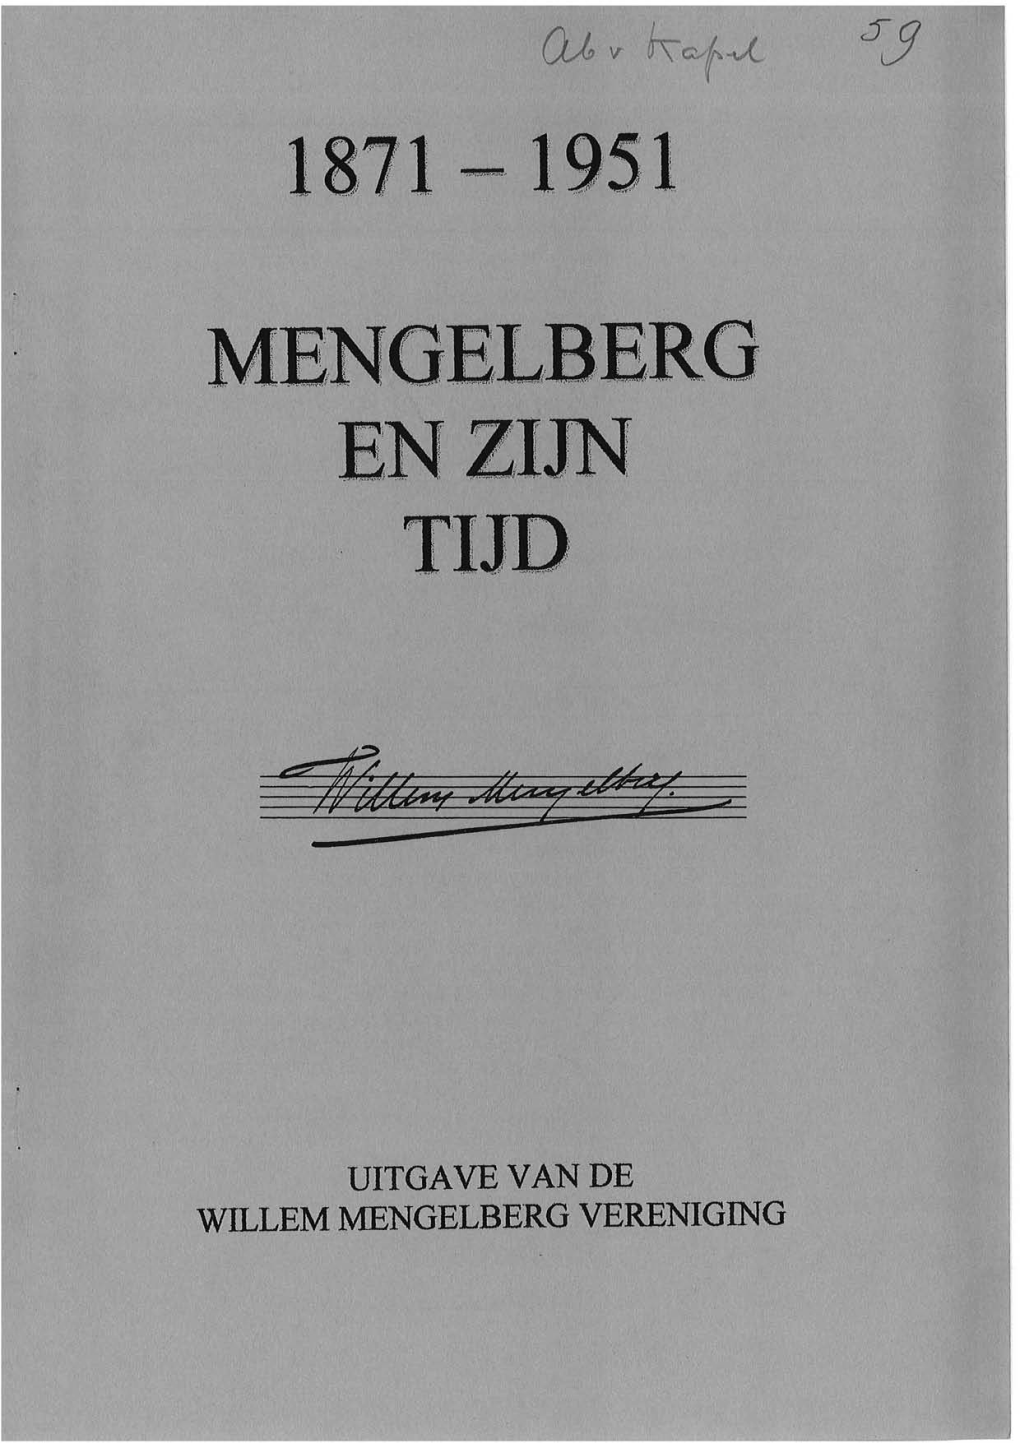 Uitga Ve V an De Willem Mengelberg Vereniging